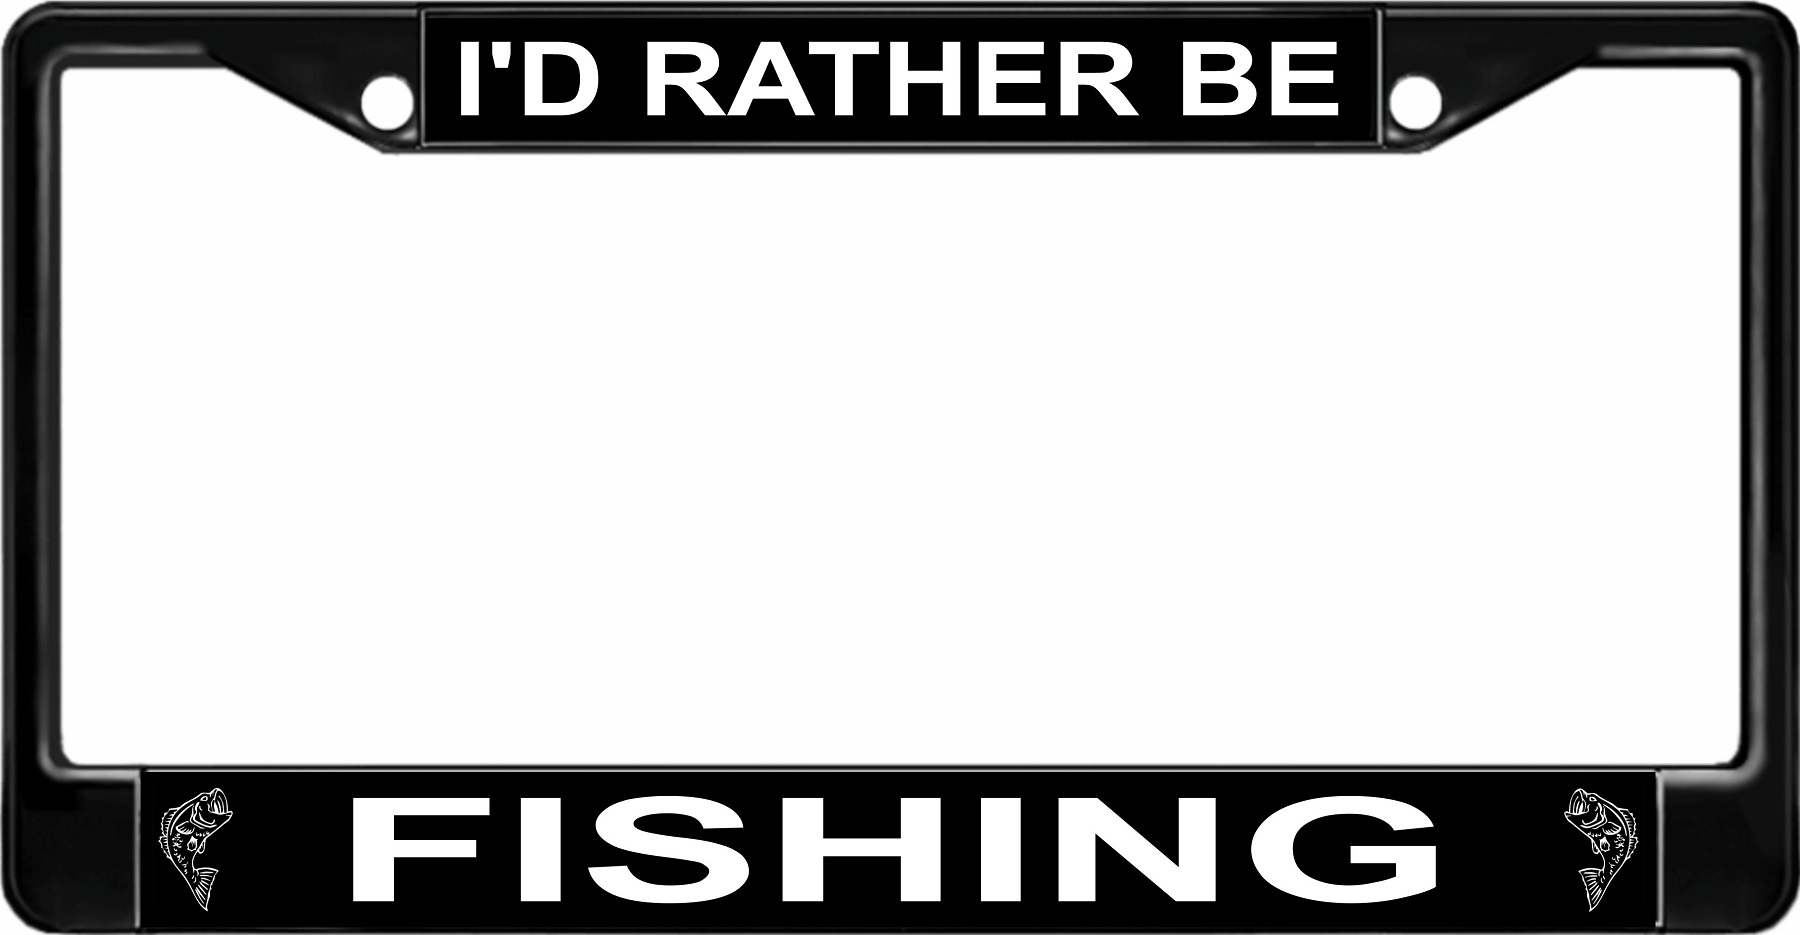 I'd Rather Be FISHING Black License Plate Frame